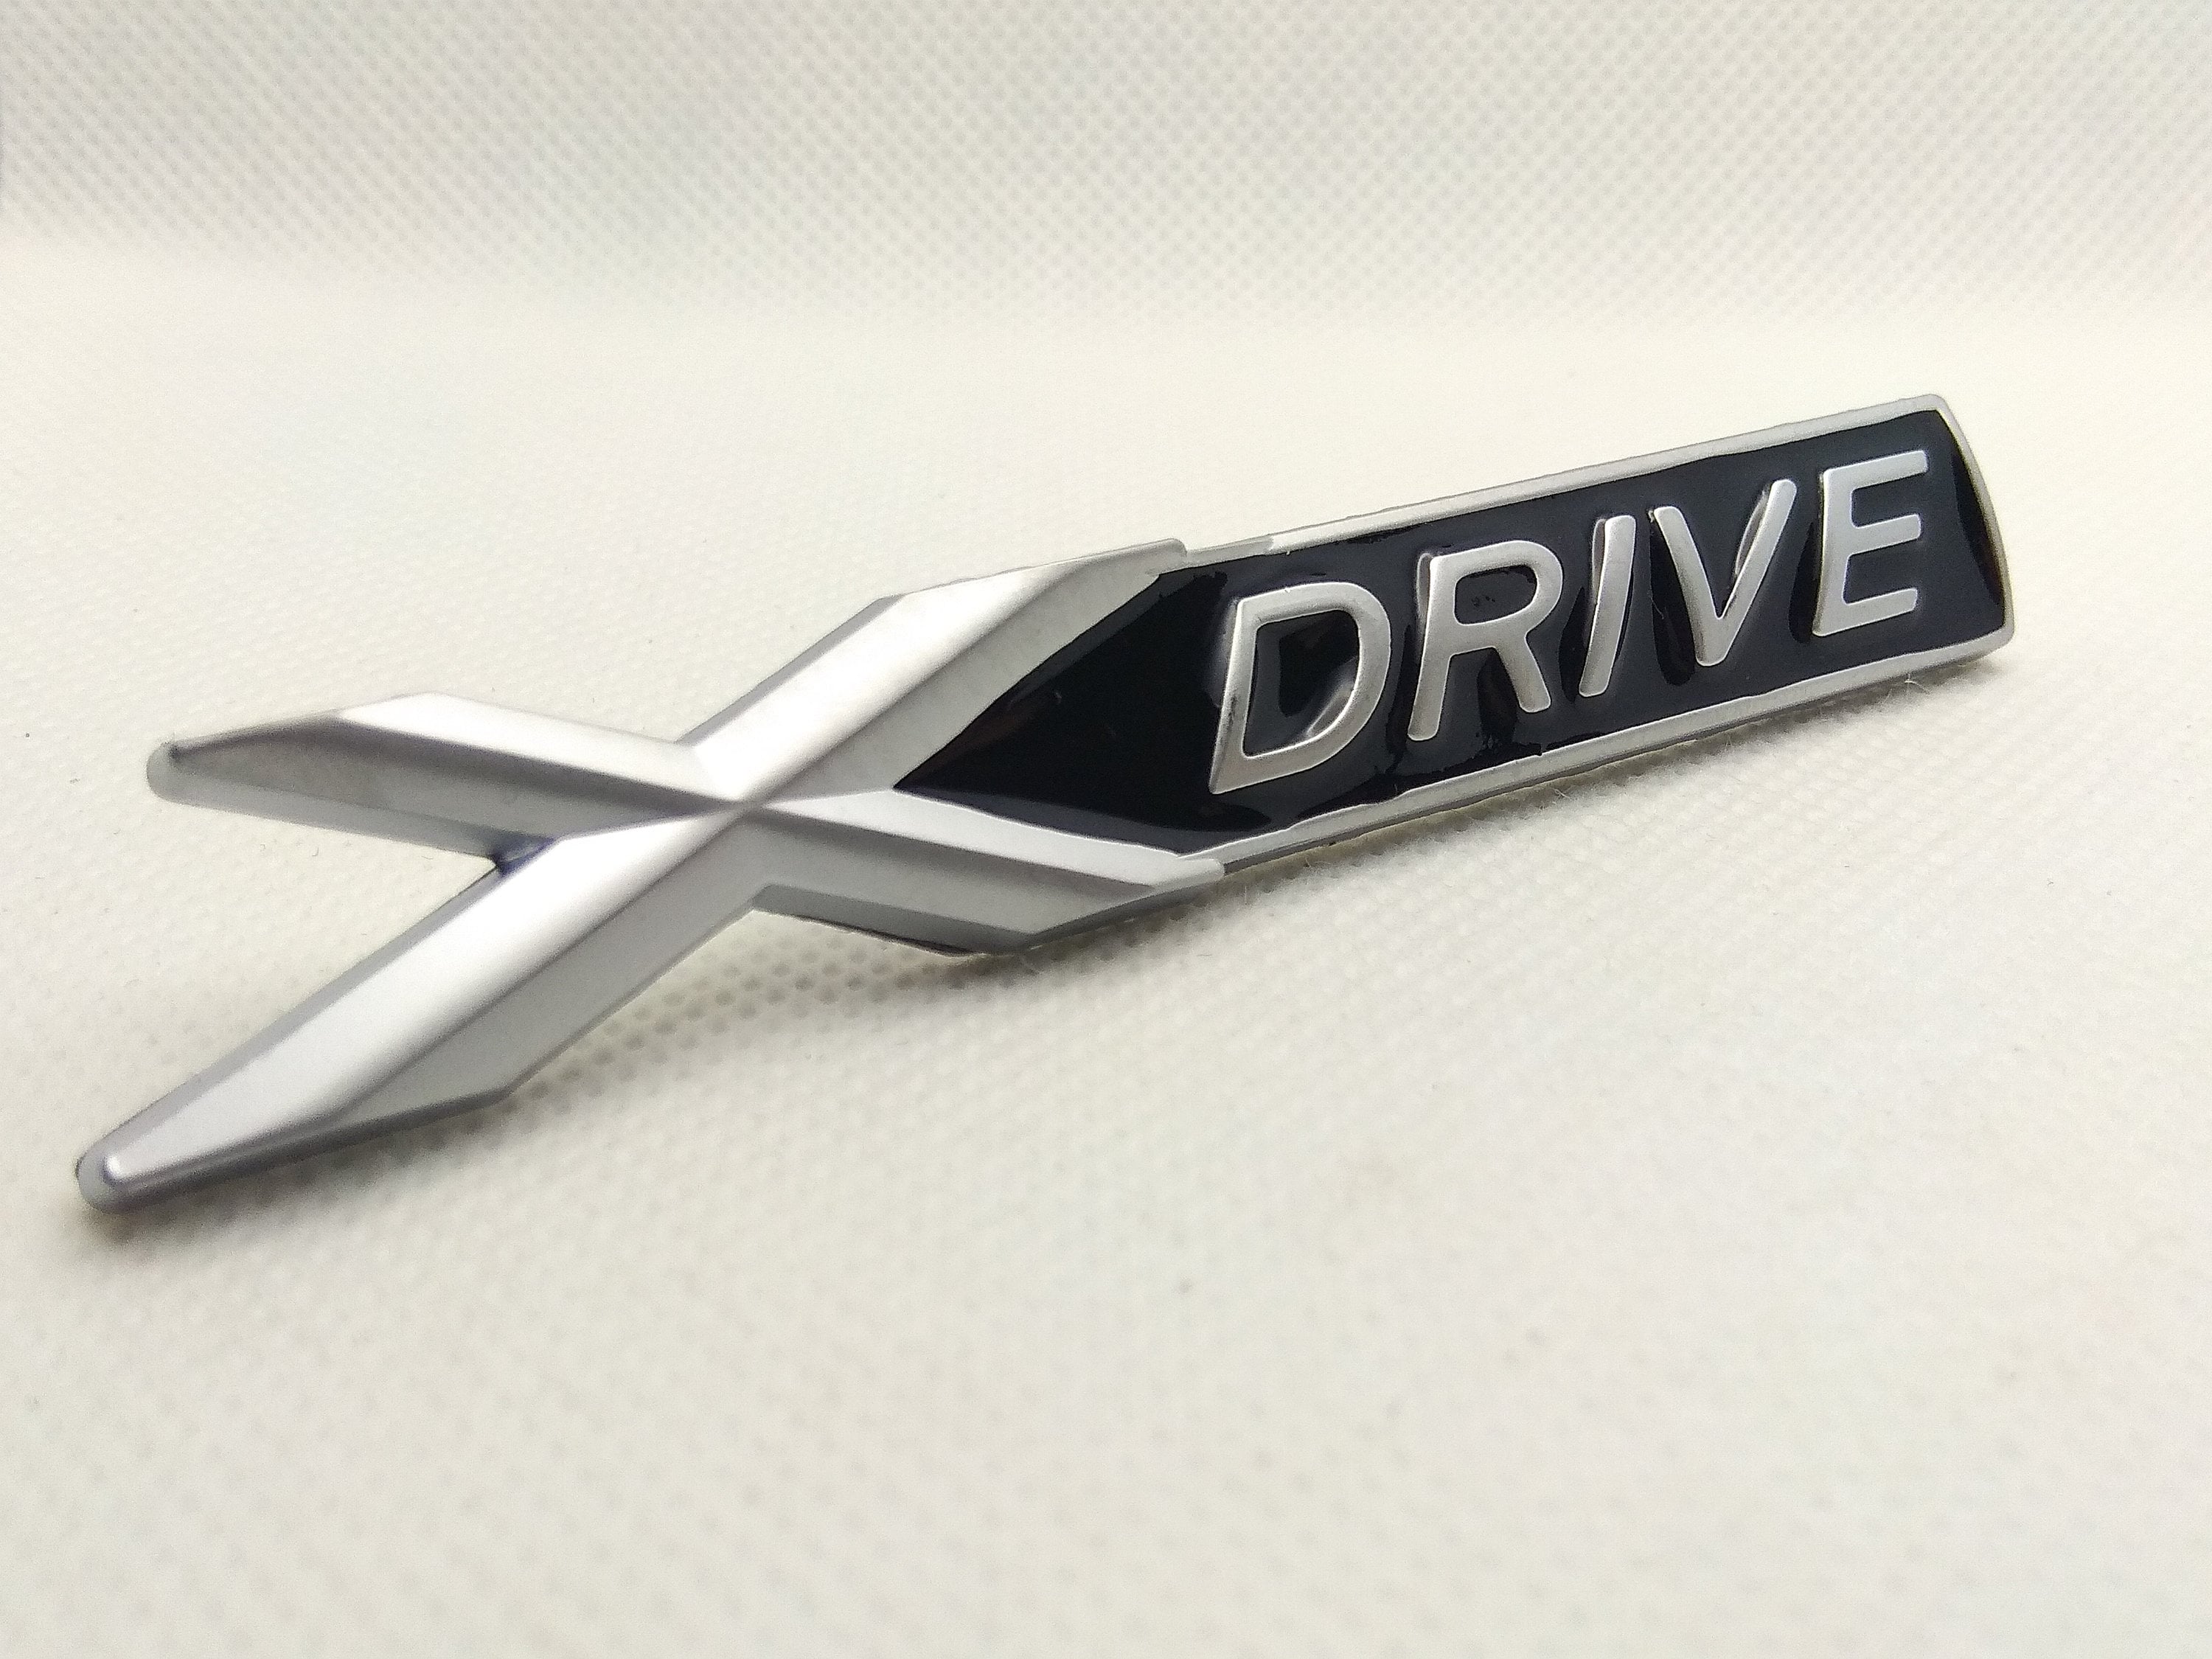 Für BMW XDRIVE SDrive Schriftzug Emblem Logo Badge Aufkleber Plakette Auto